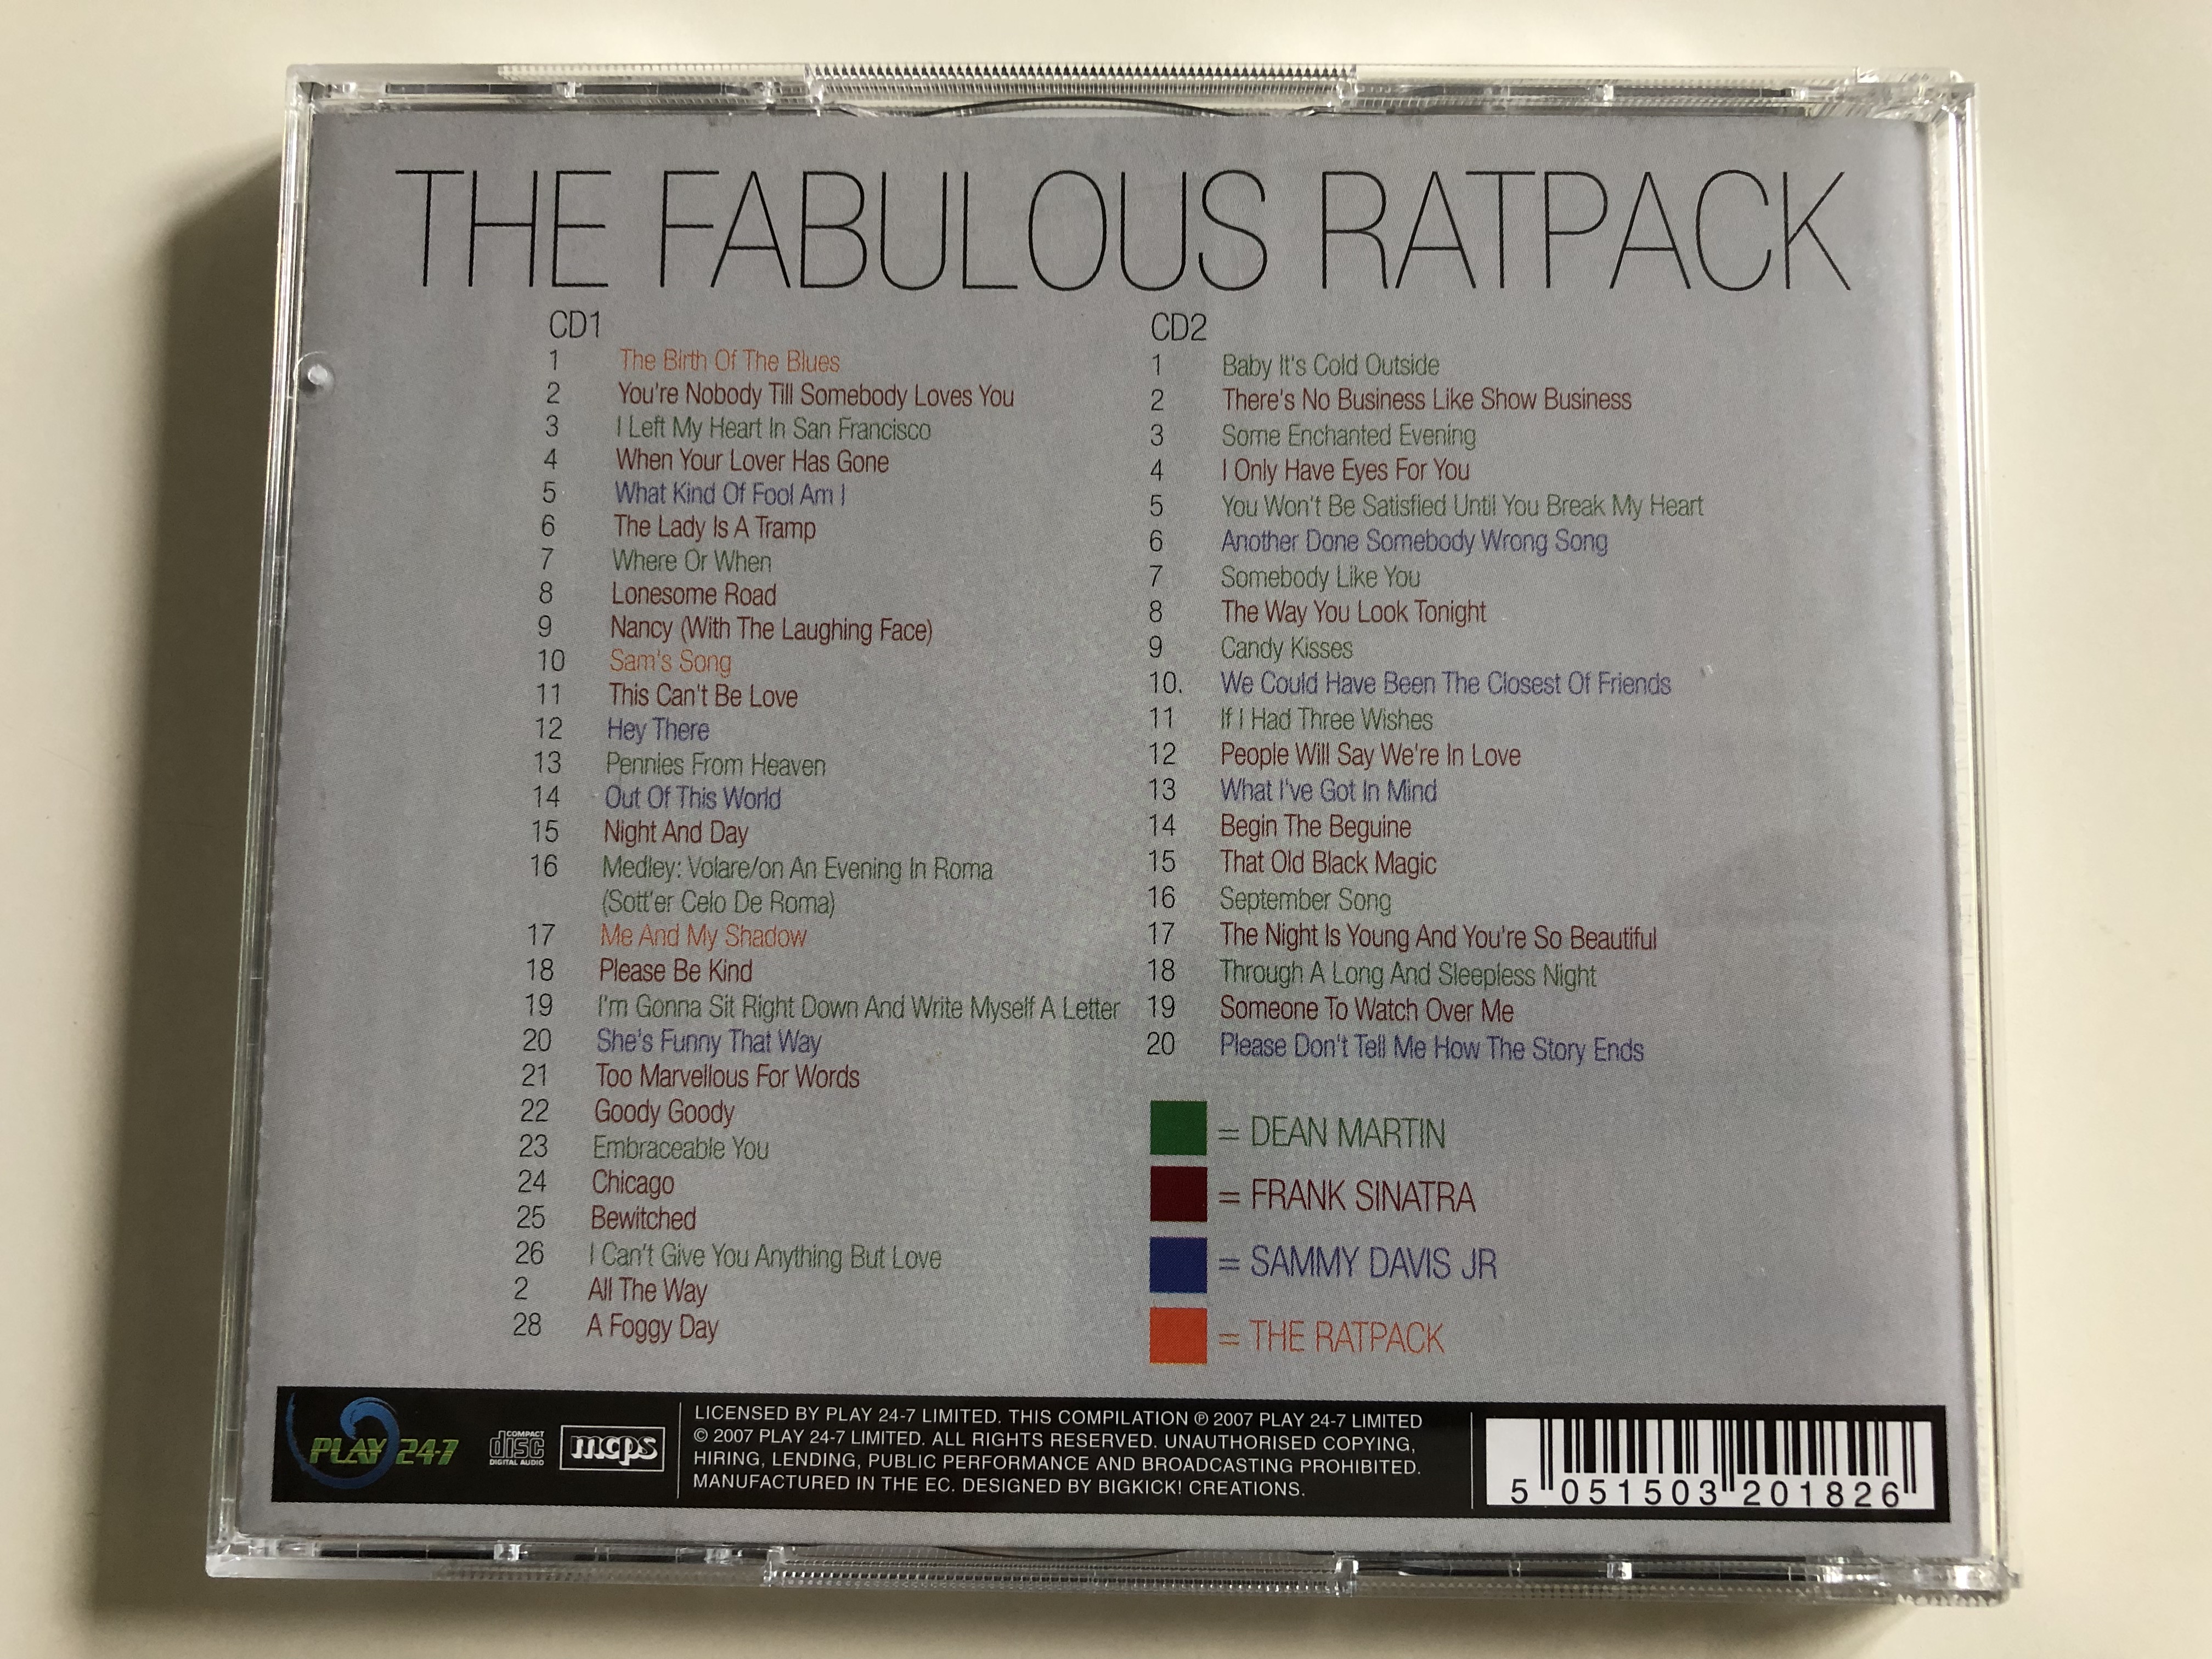 the-fabulous-ratpack-2cd-collectors-edition-dean-martin-frank-sinatra-sammy-davis-jr-the-ratpack-2x-audio-cd-2007-play2-018b-8-.jpg